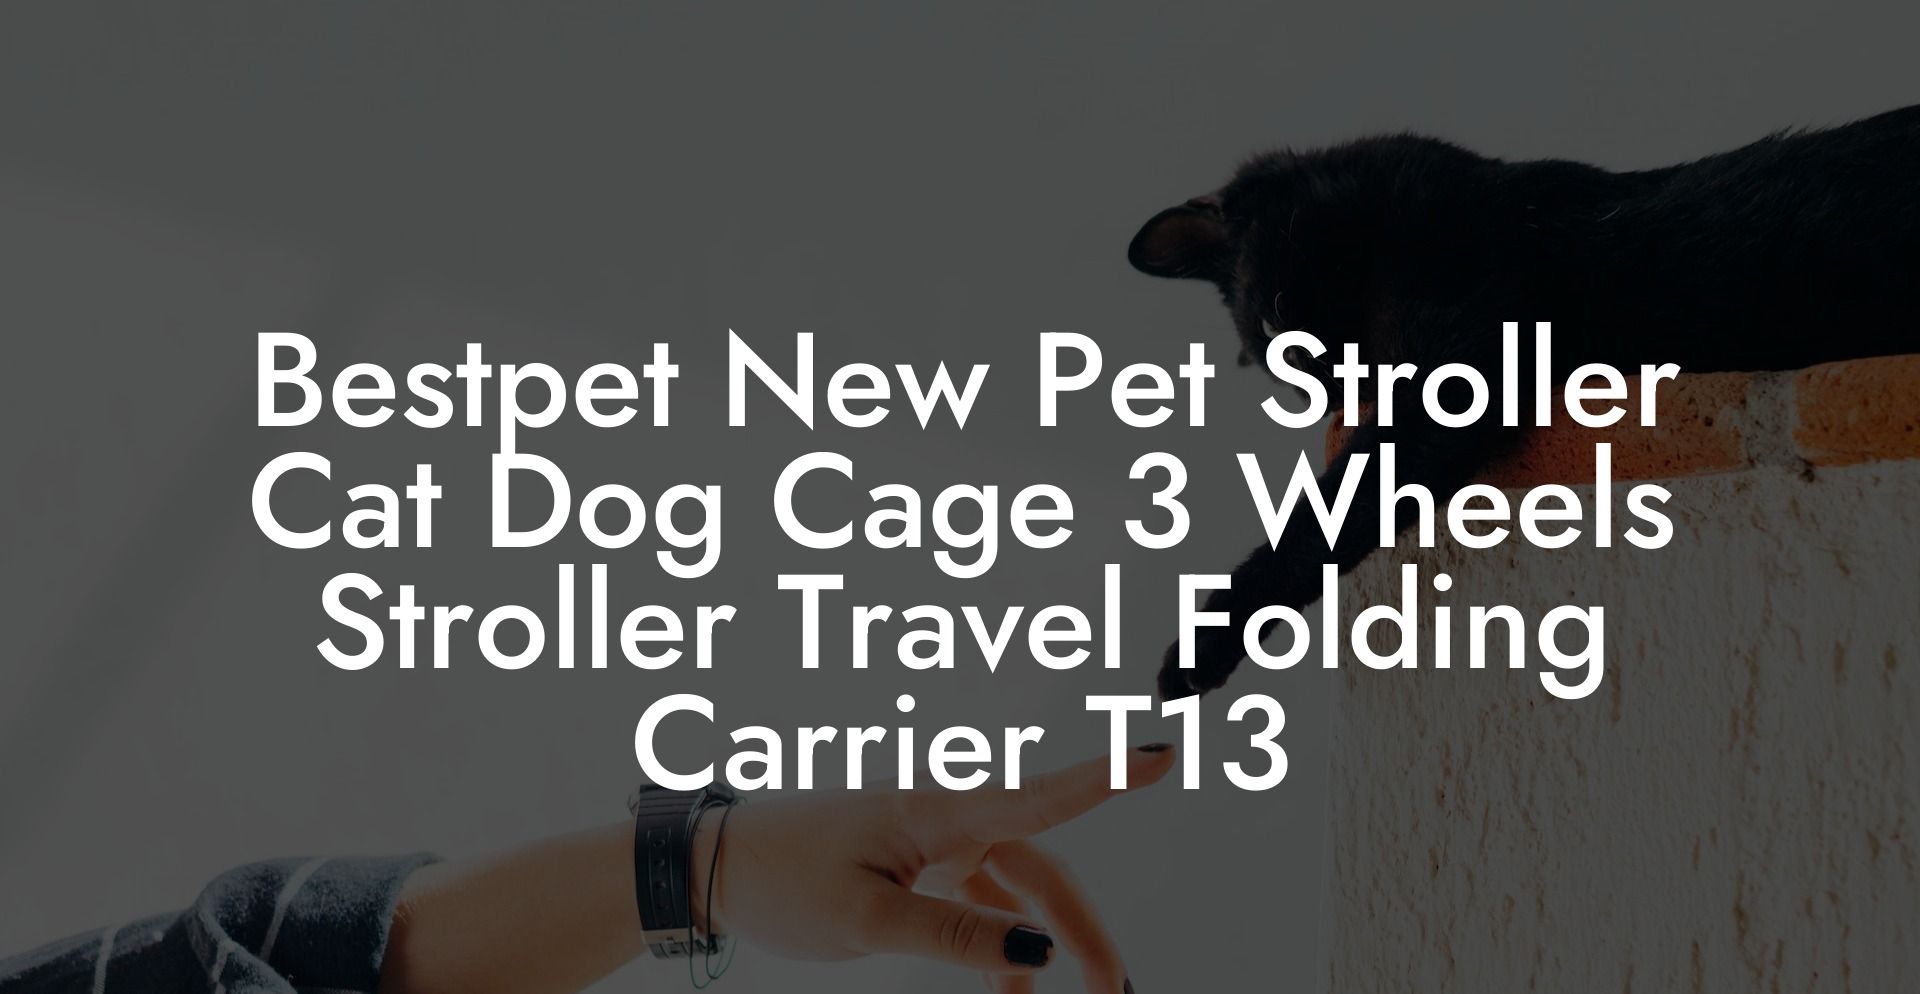 Bestpet New Pet Stroller Cat Dog Cage 3 Wheels Stroller Travel Folding Carrier T13